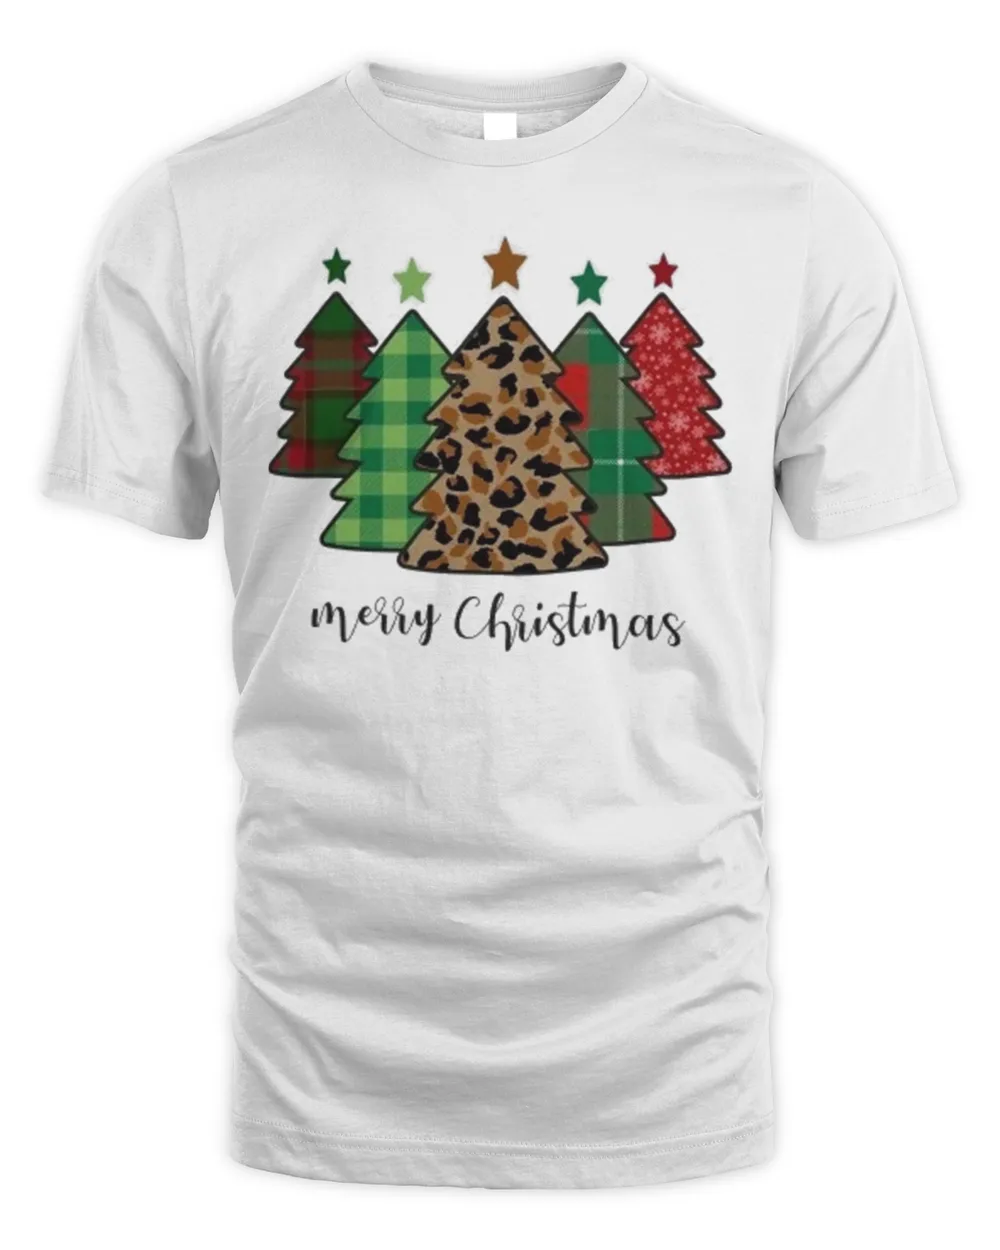 Leopard Christmas Tree T-Shirt